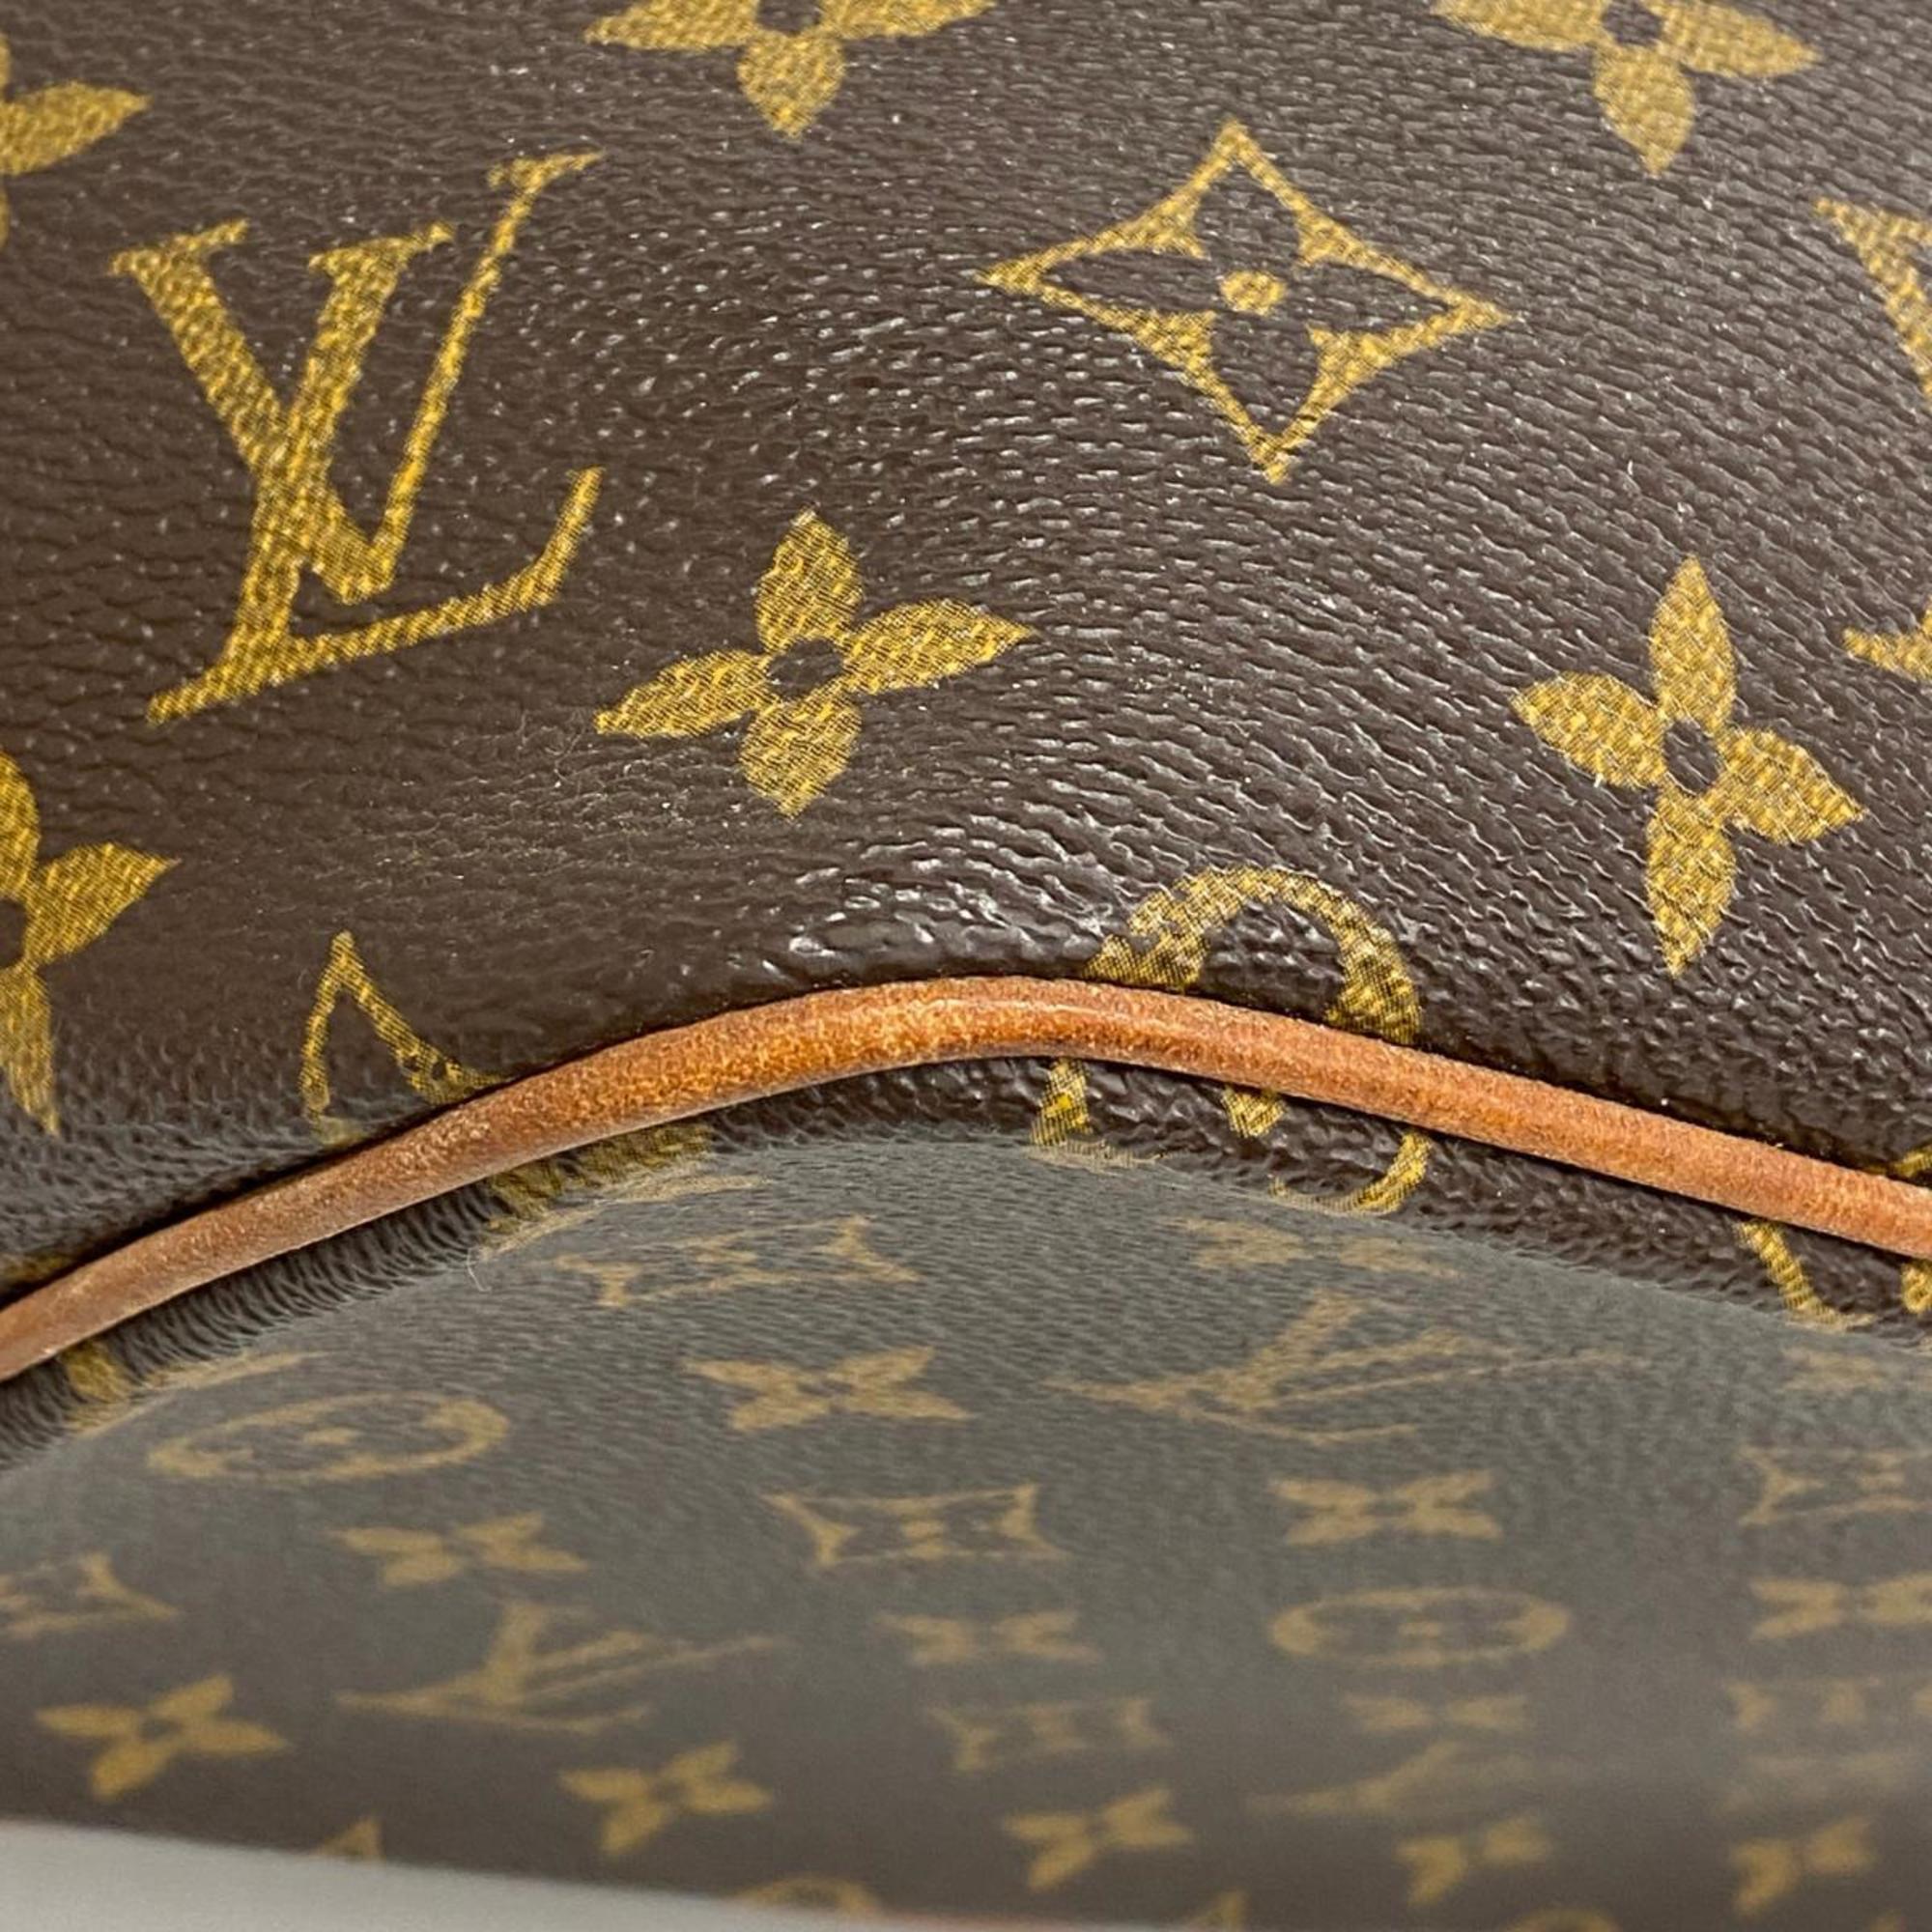 Louis Vuitton Tote Bag Monogram Palermo PM M40145 Brown Women's